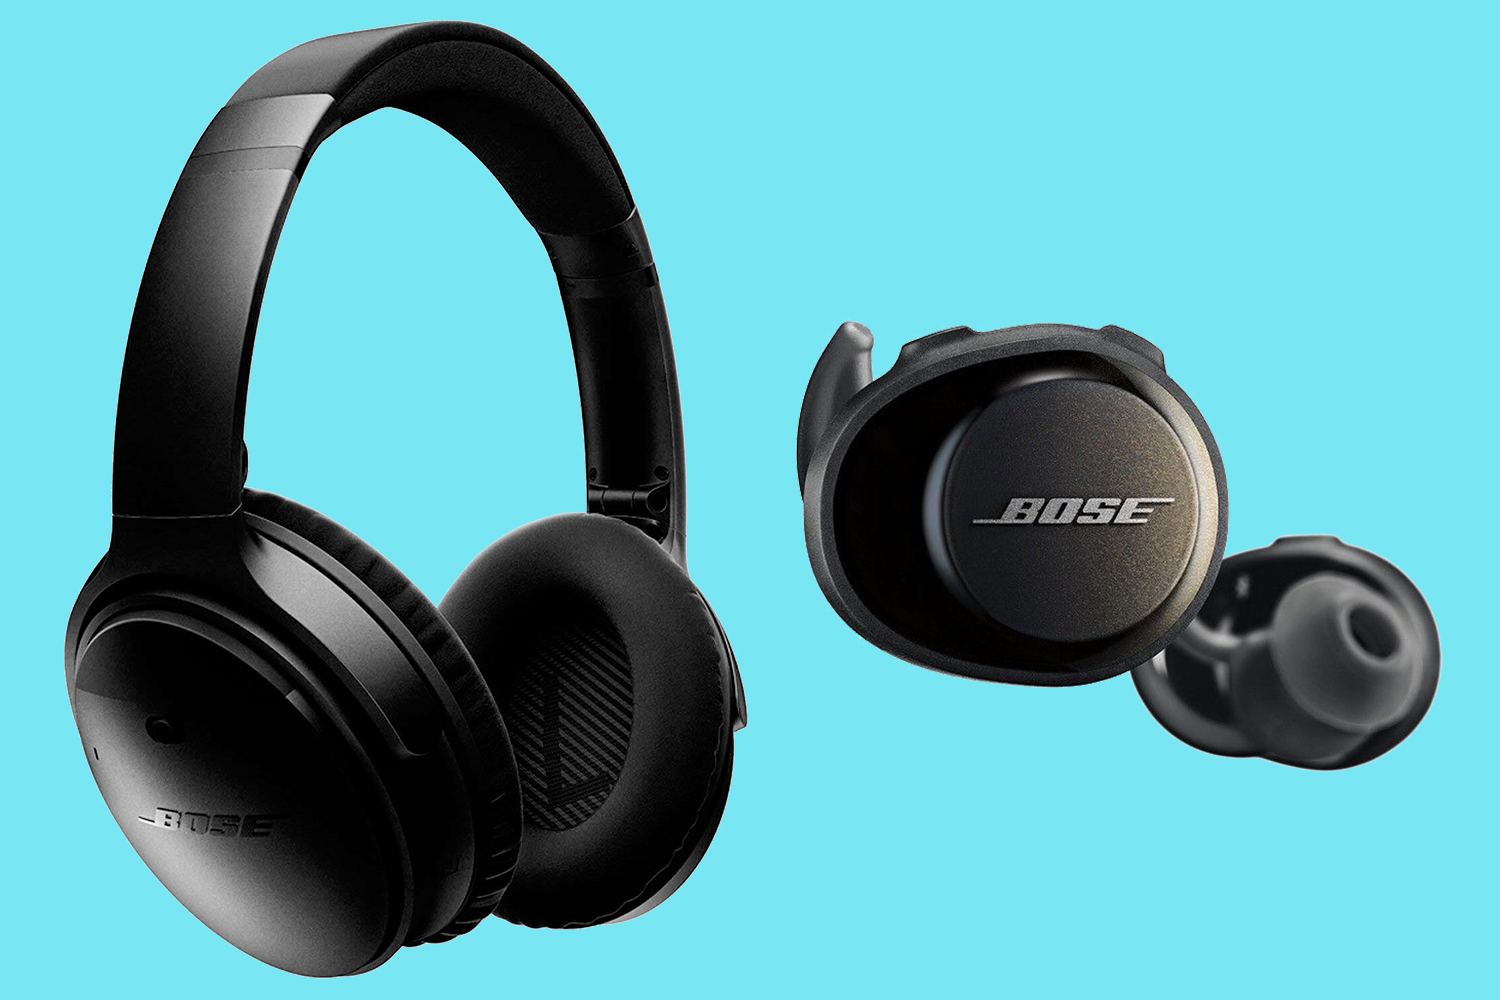 Bose Wireless Headphones on Sale Over 40% Off InsideHook